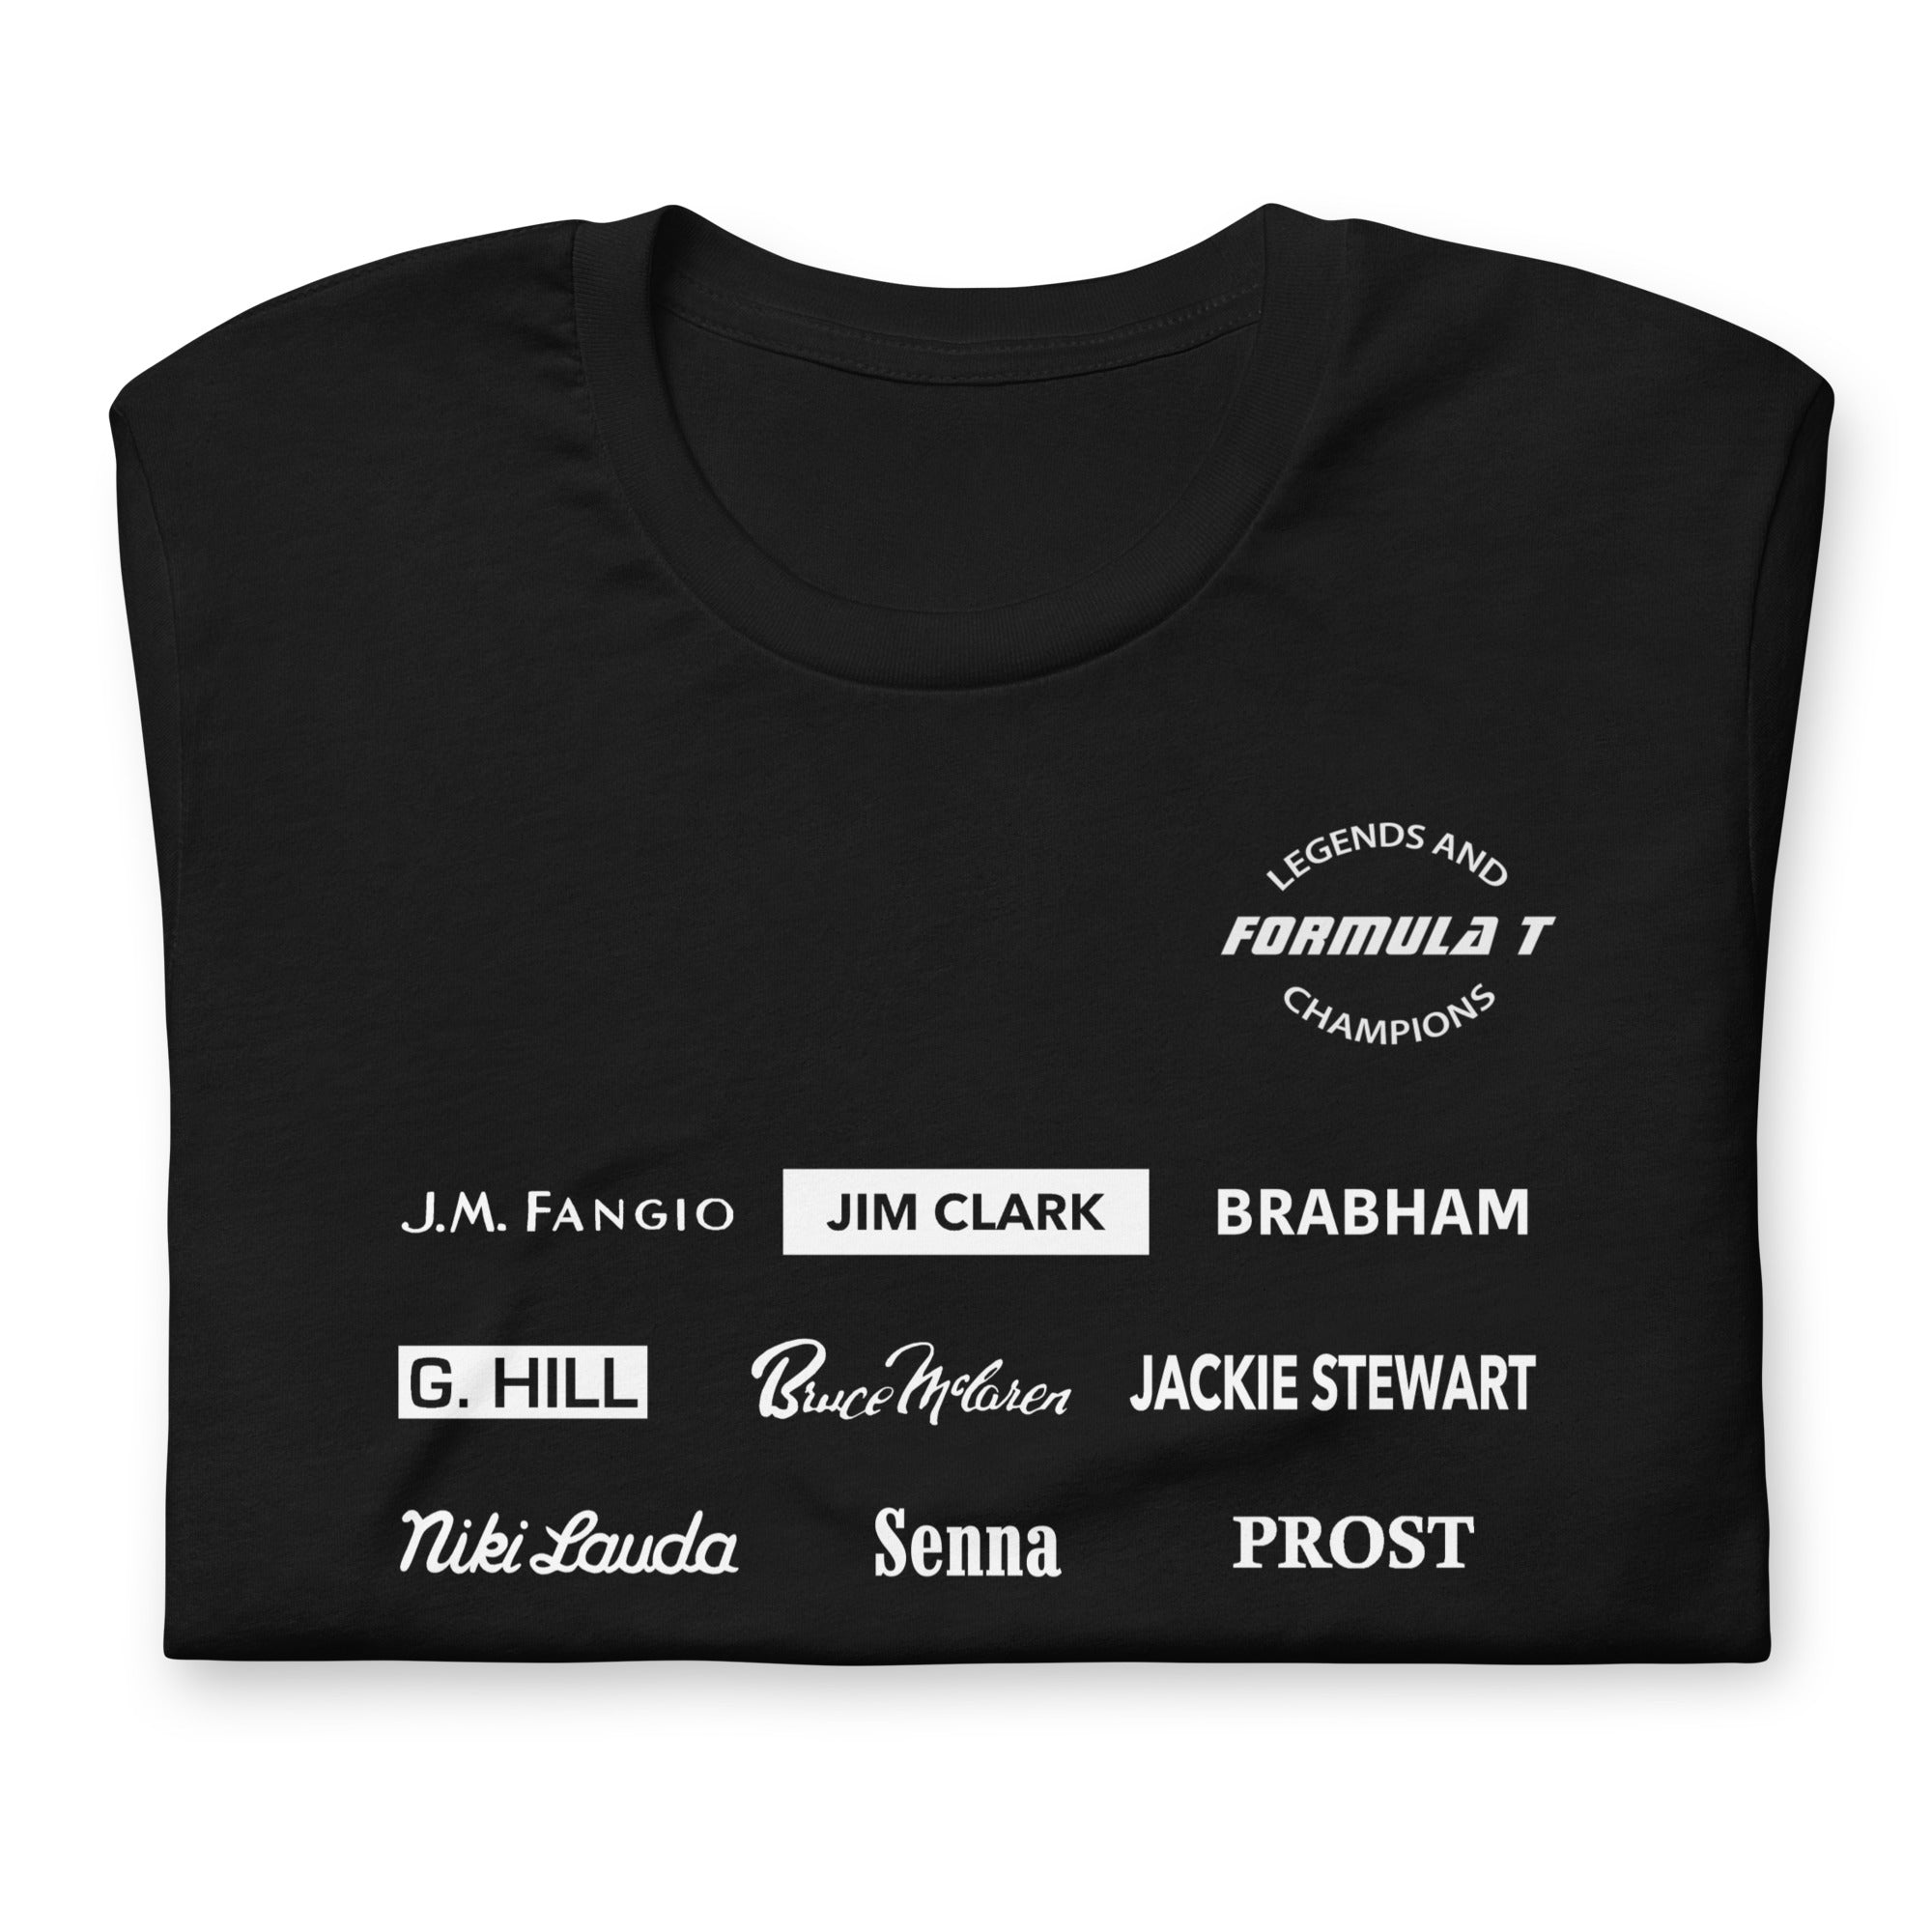 Fangio, Clark, Brabham, Hill, McLaren, Stewart, Lauda, Senna, Prost, Schumacher, Vettel, lewis hamilton designed black tshirt folded